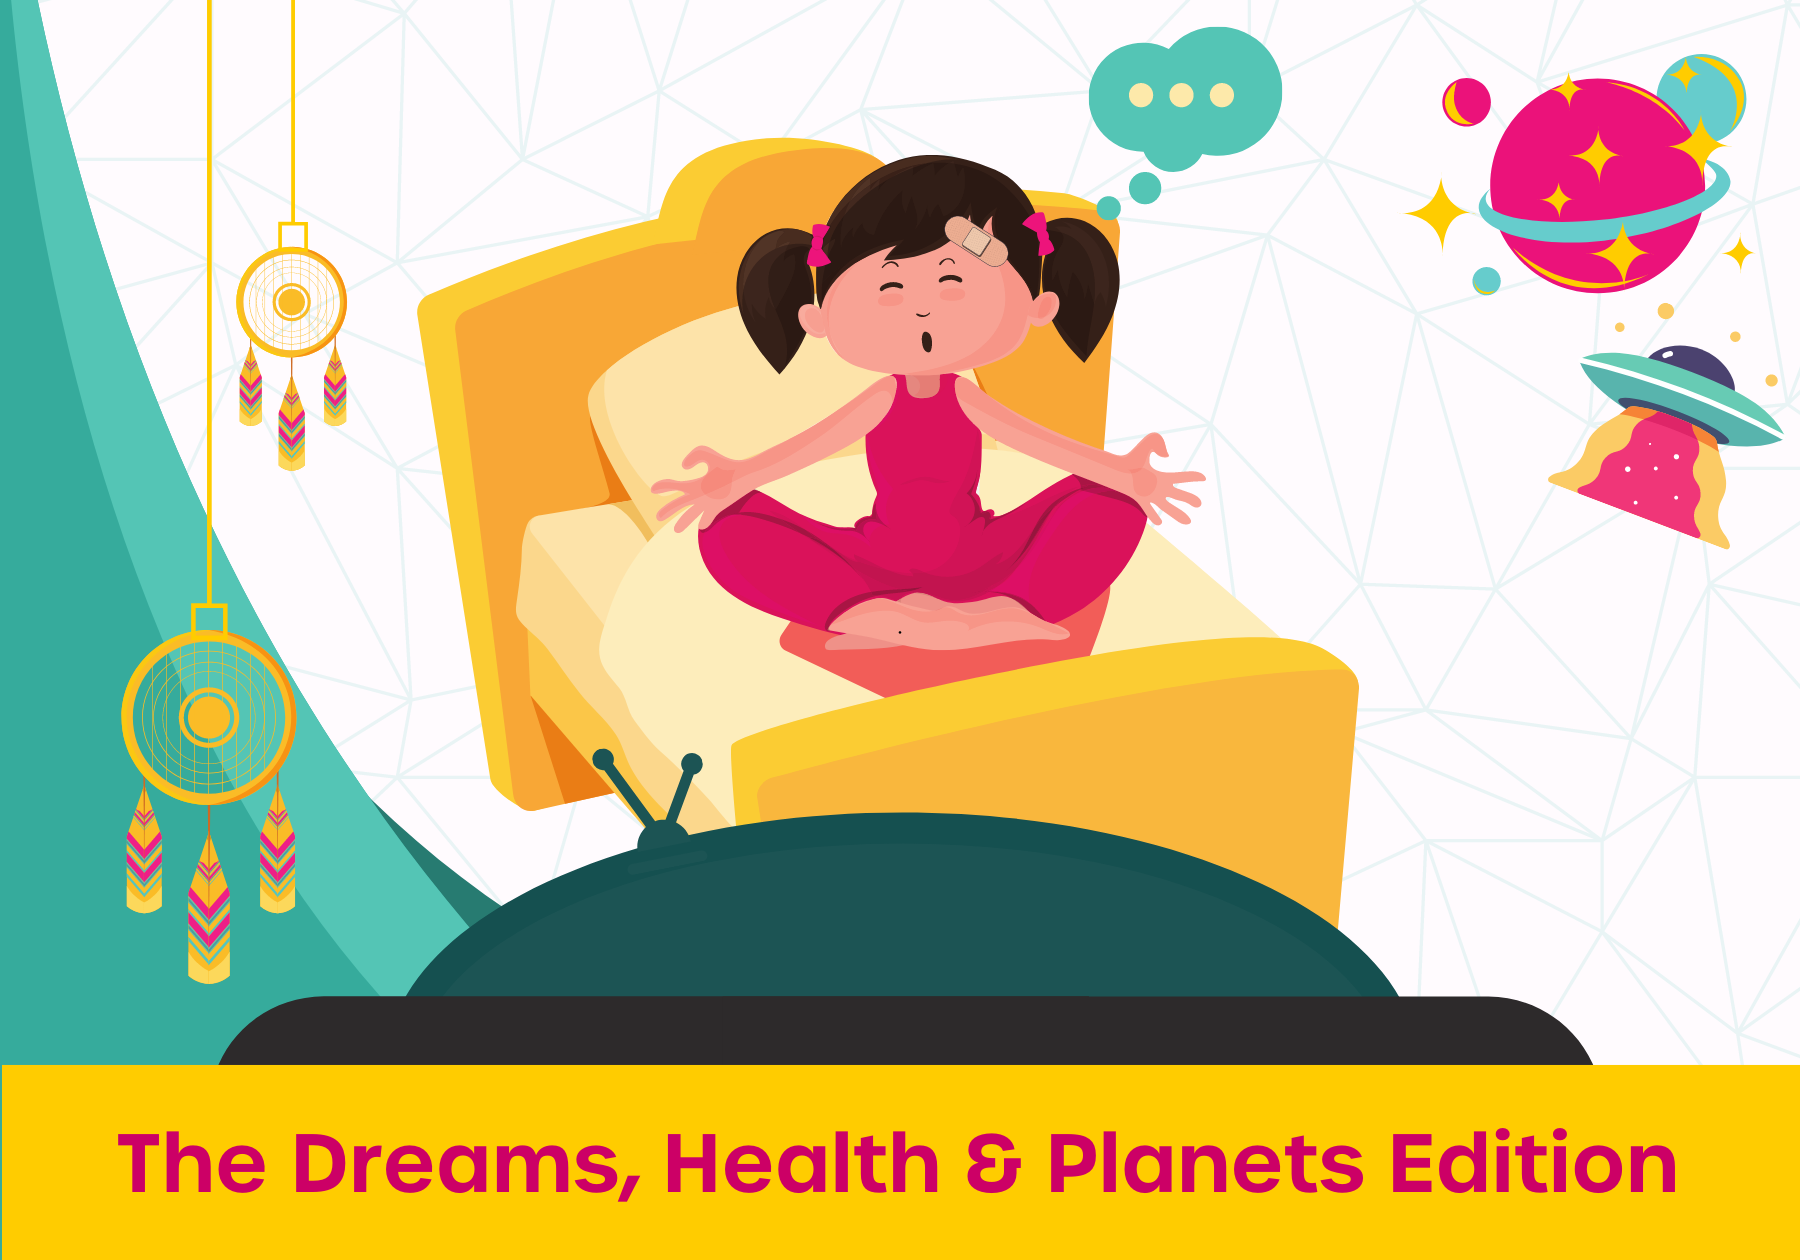 Shlokas made fun dreams health planet edition product banner